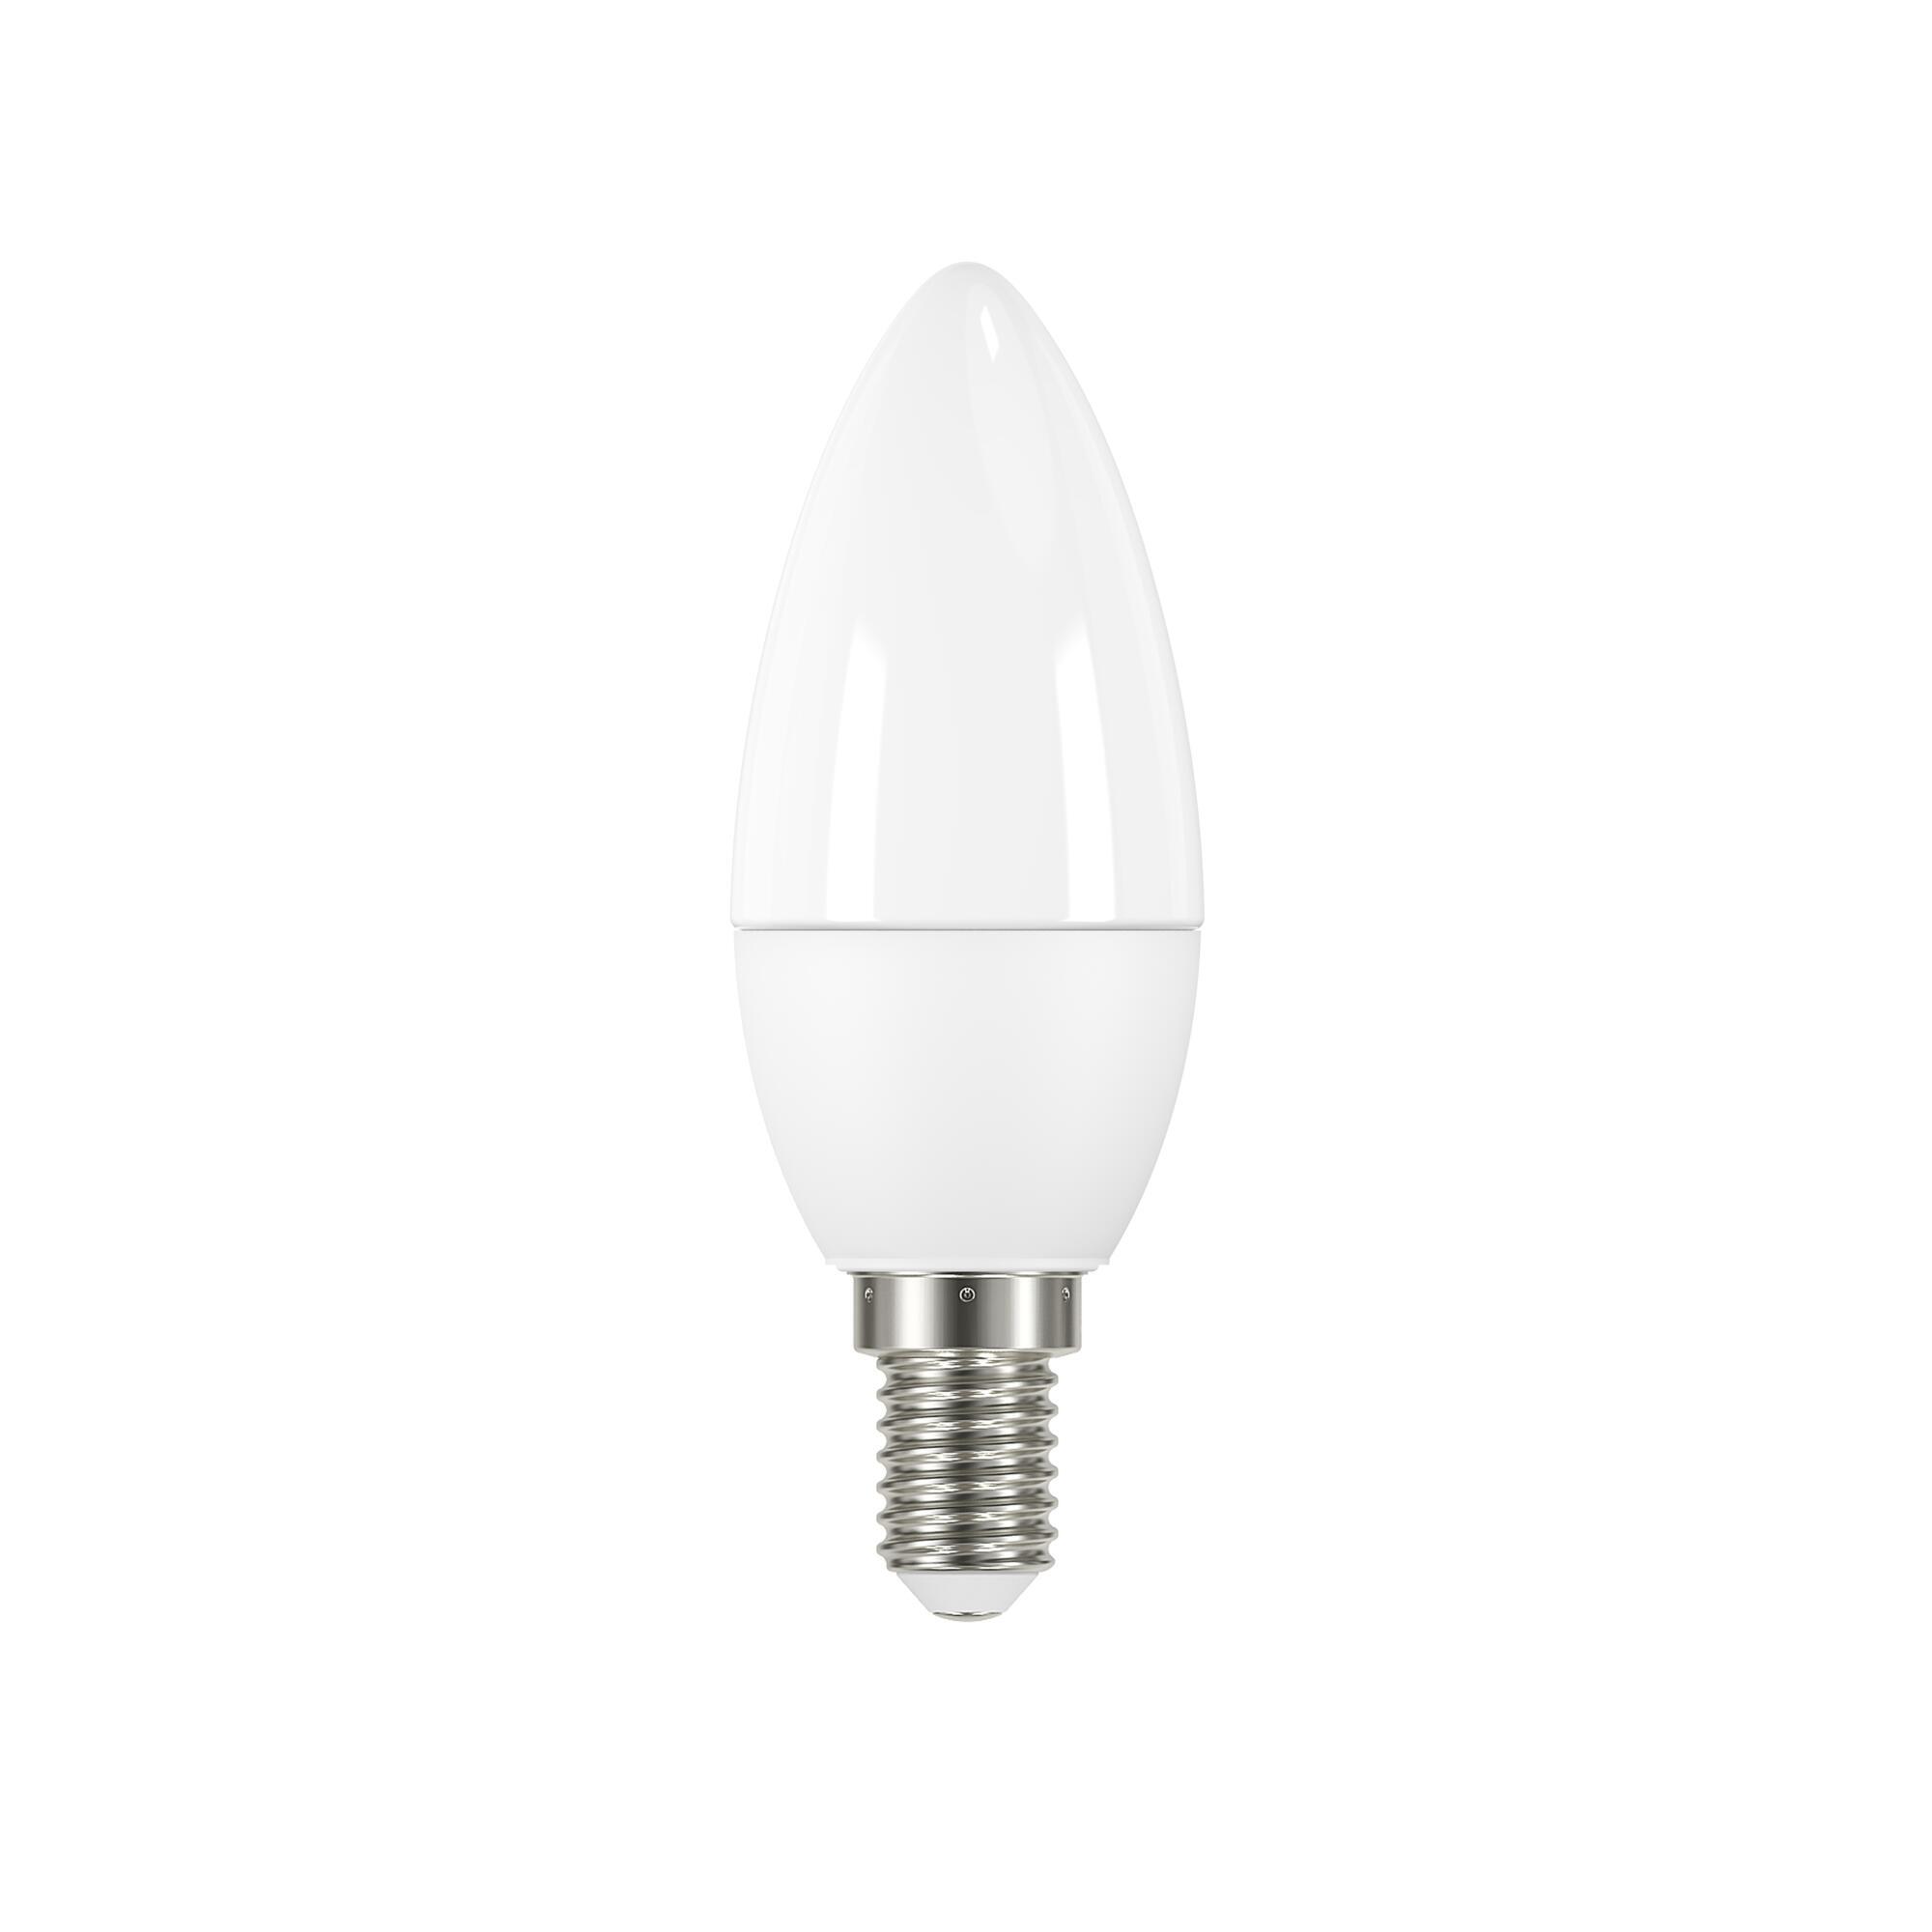 Ampoule led flamme E14, 470Lm = 40W, blanc chaud, Natulight, LEXMAN